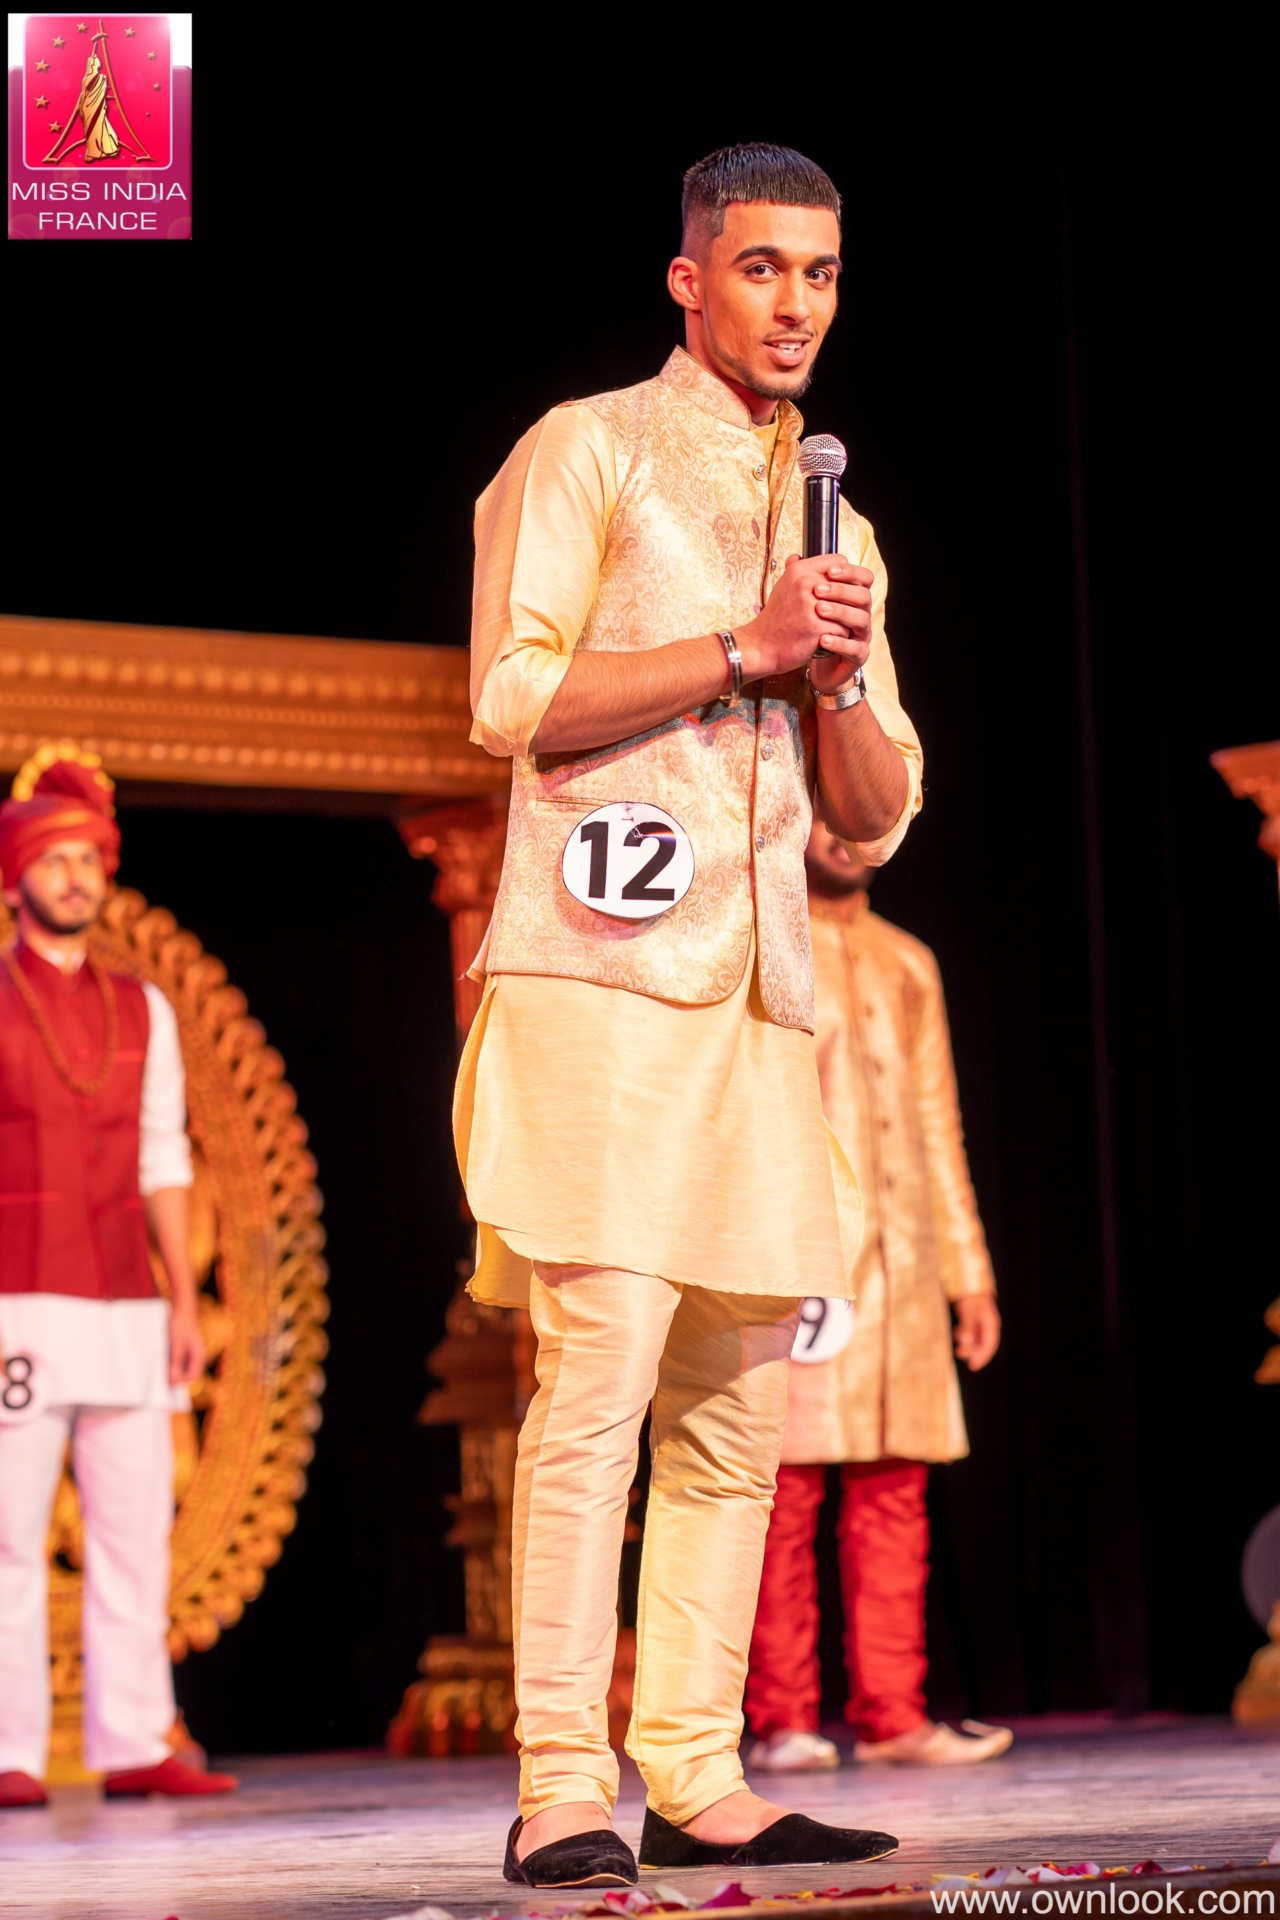 Mister India France 2020 (37)